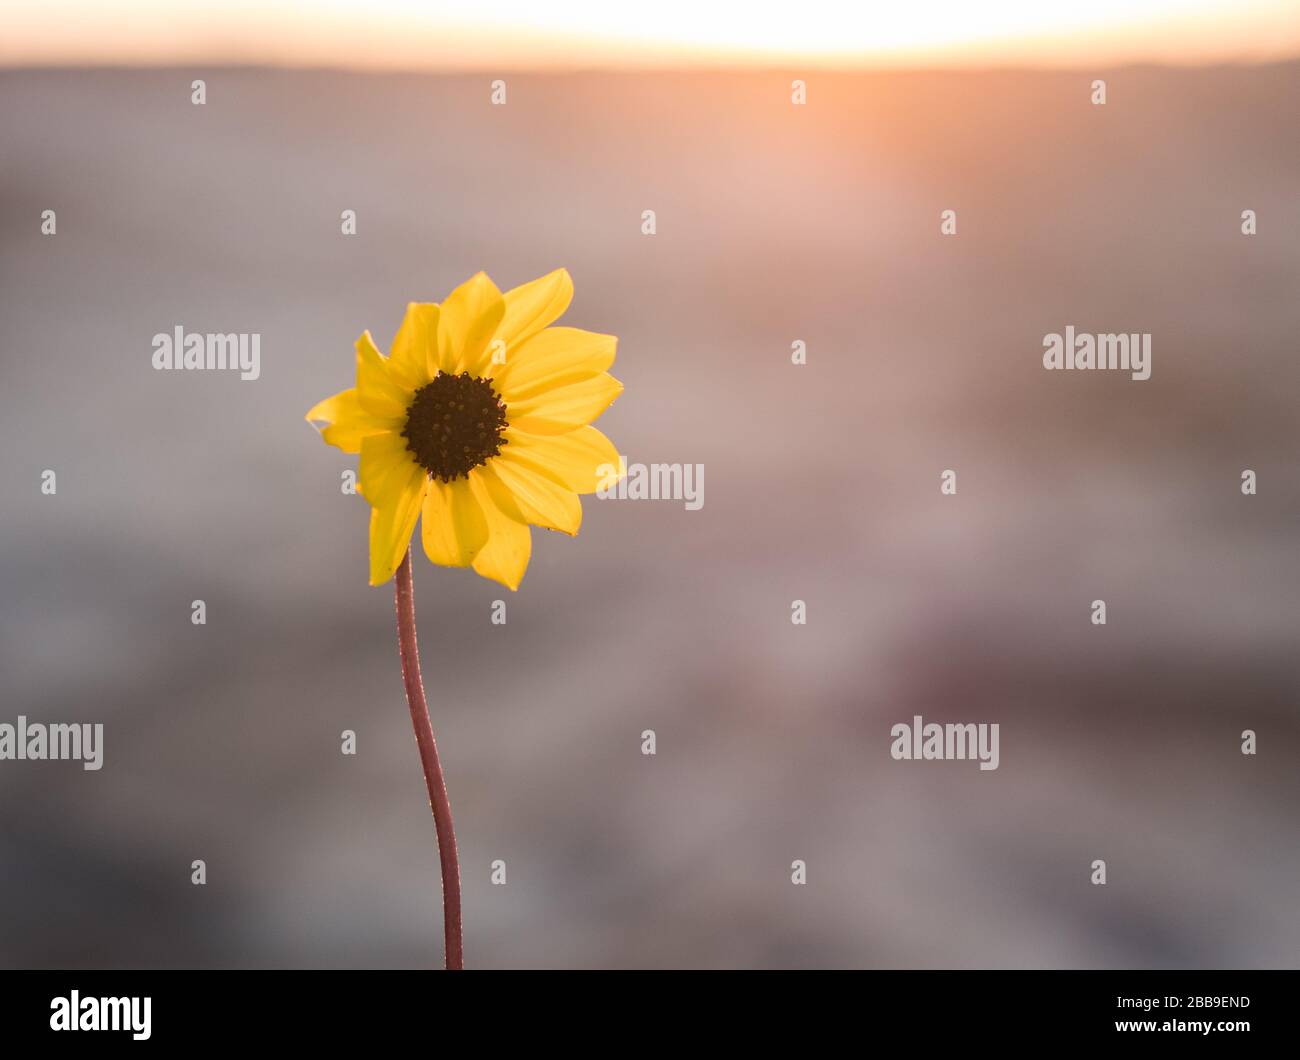 A beach sunflower against a blurred sunrise background. Stock Photo